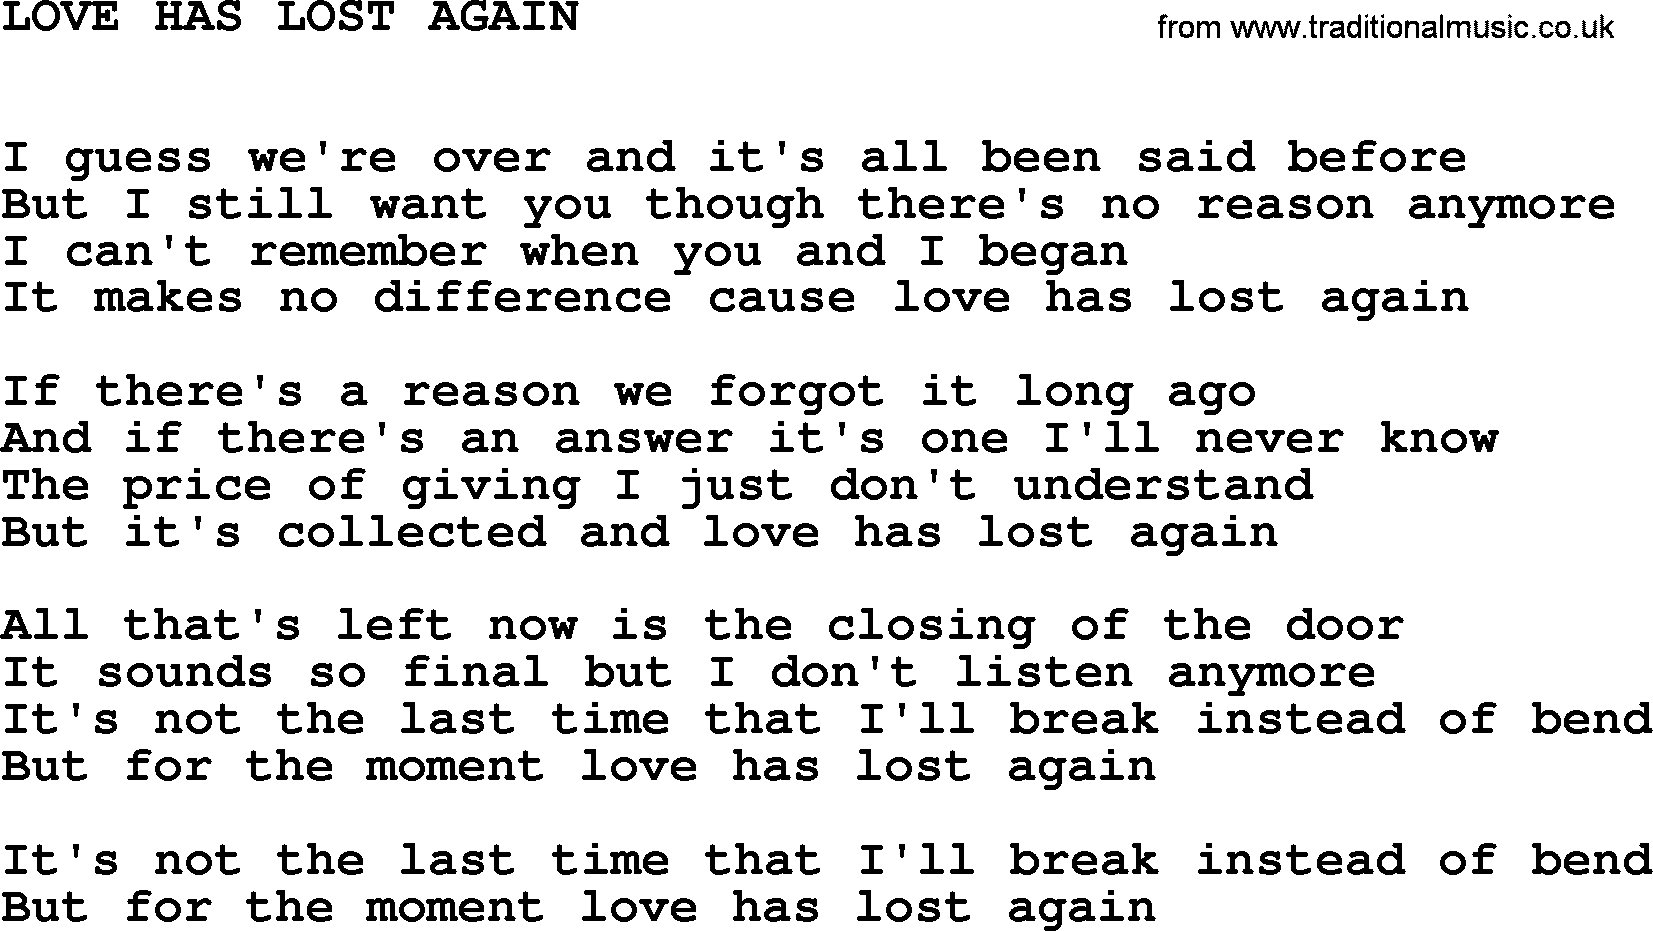 Johnny Cash song Love Has Lost Again.txt lyrics